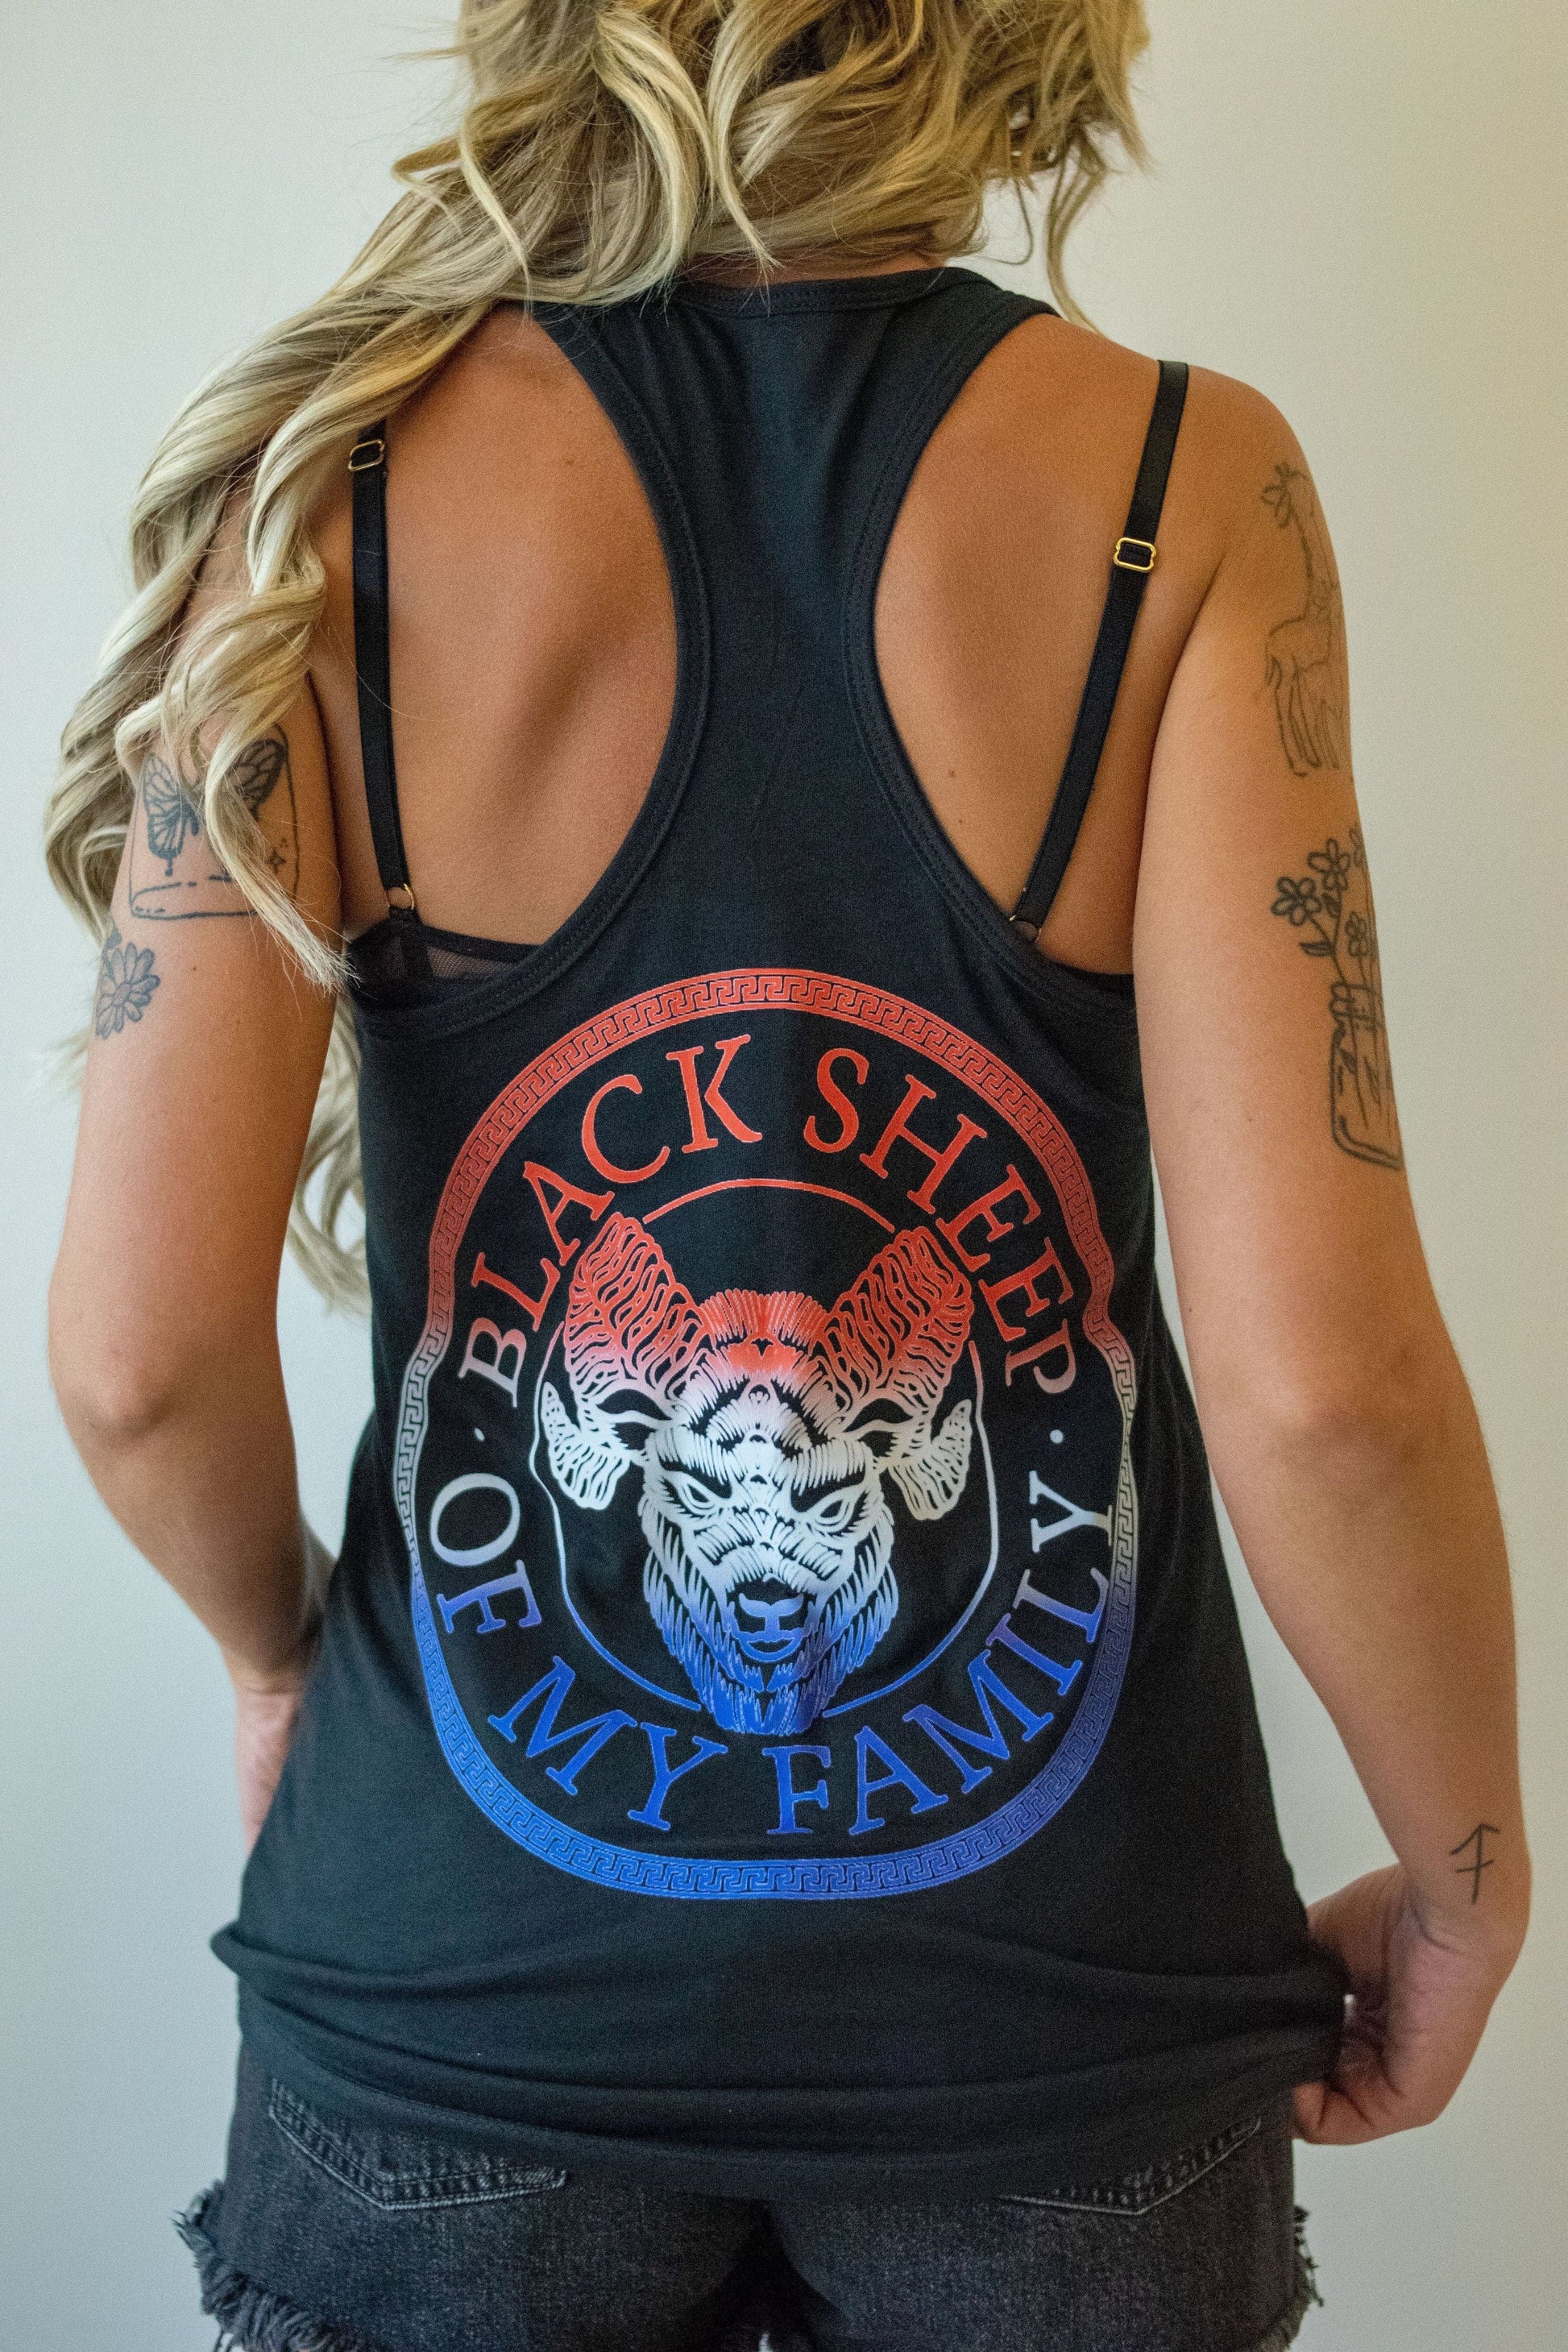 All-American Black Sheep Women's Racerback Tank